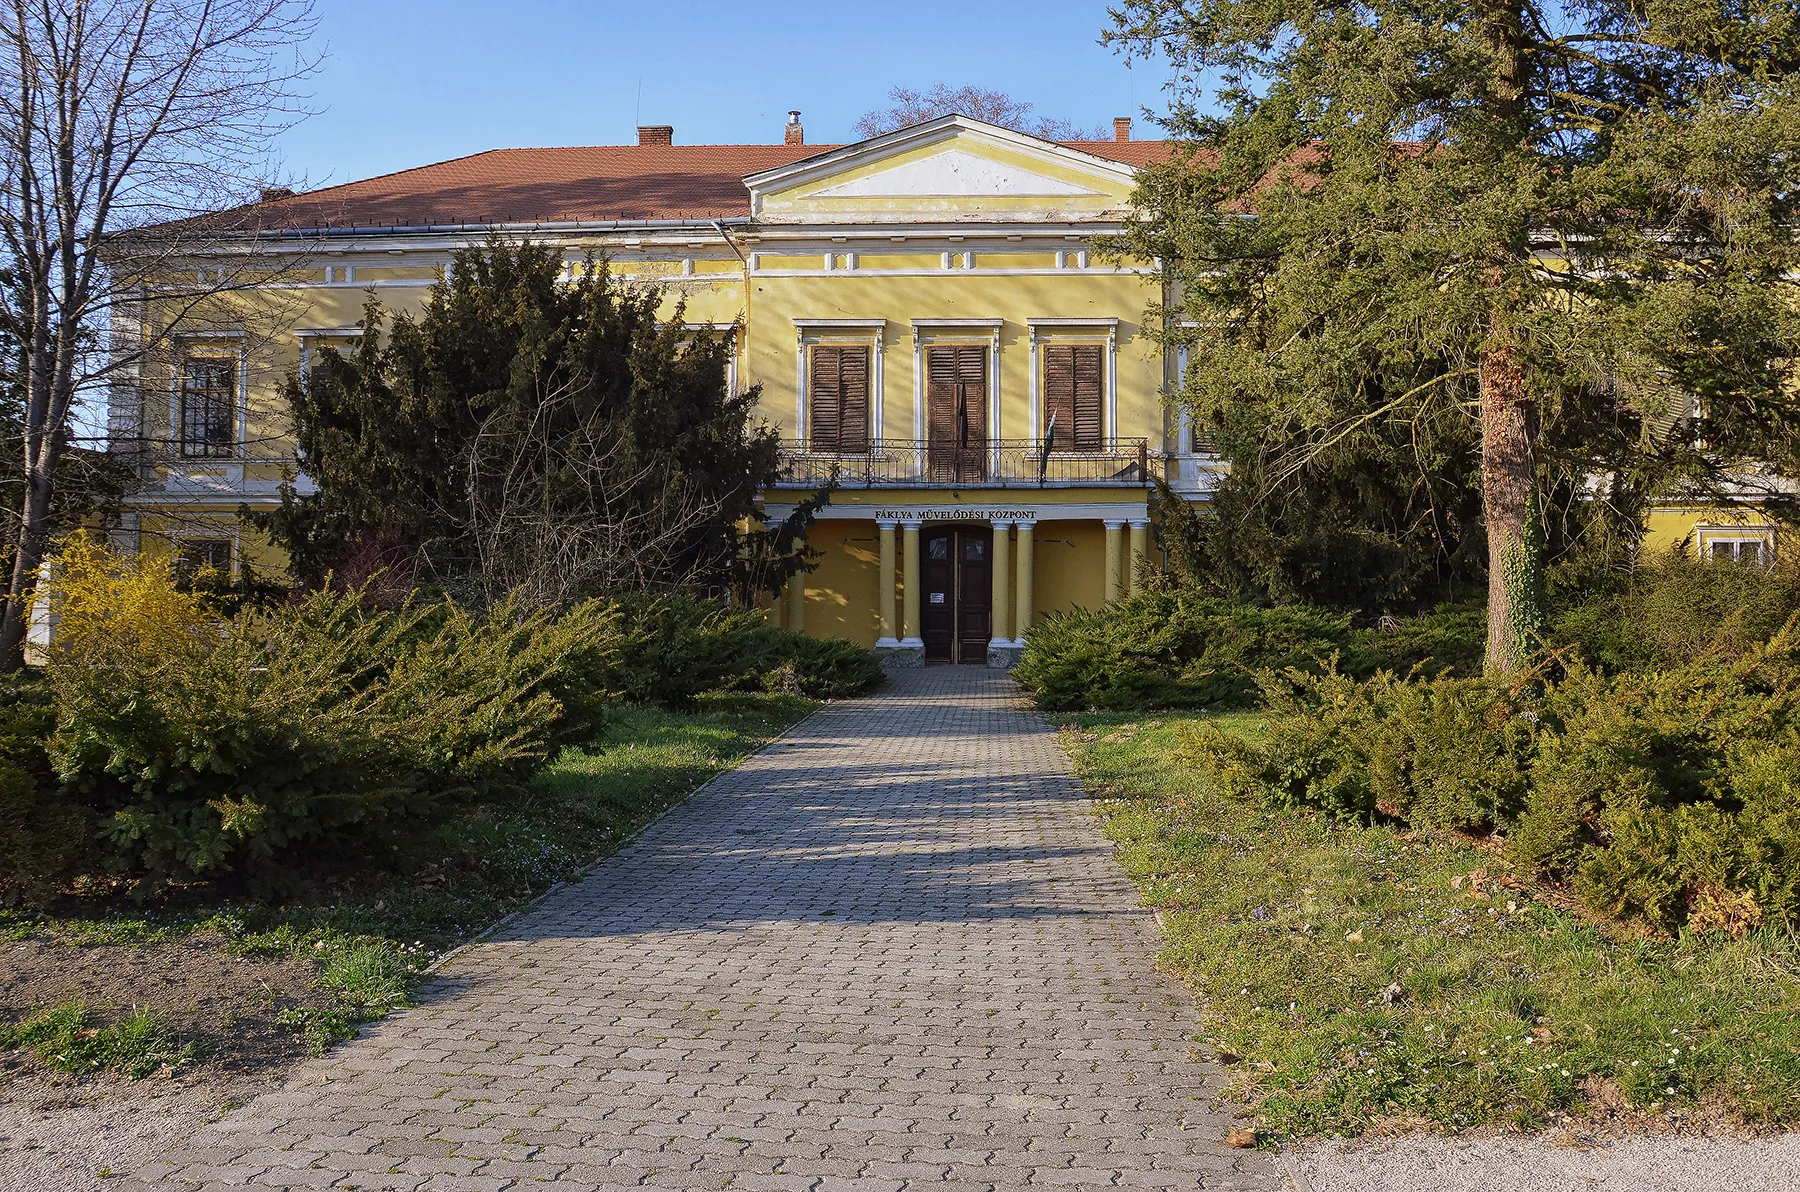 Photo showing: Letenye, Hungary, the Szapáry-Andrássy Mansion